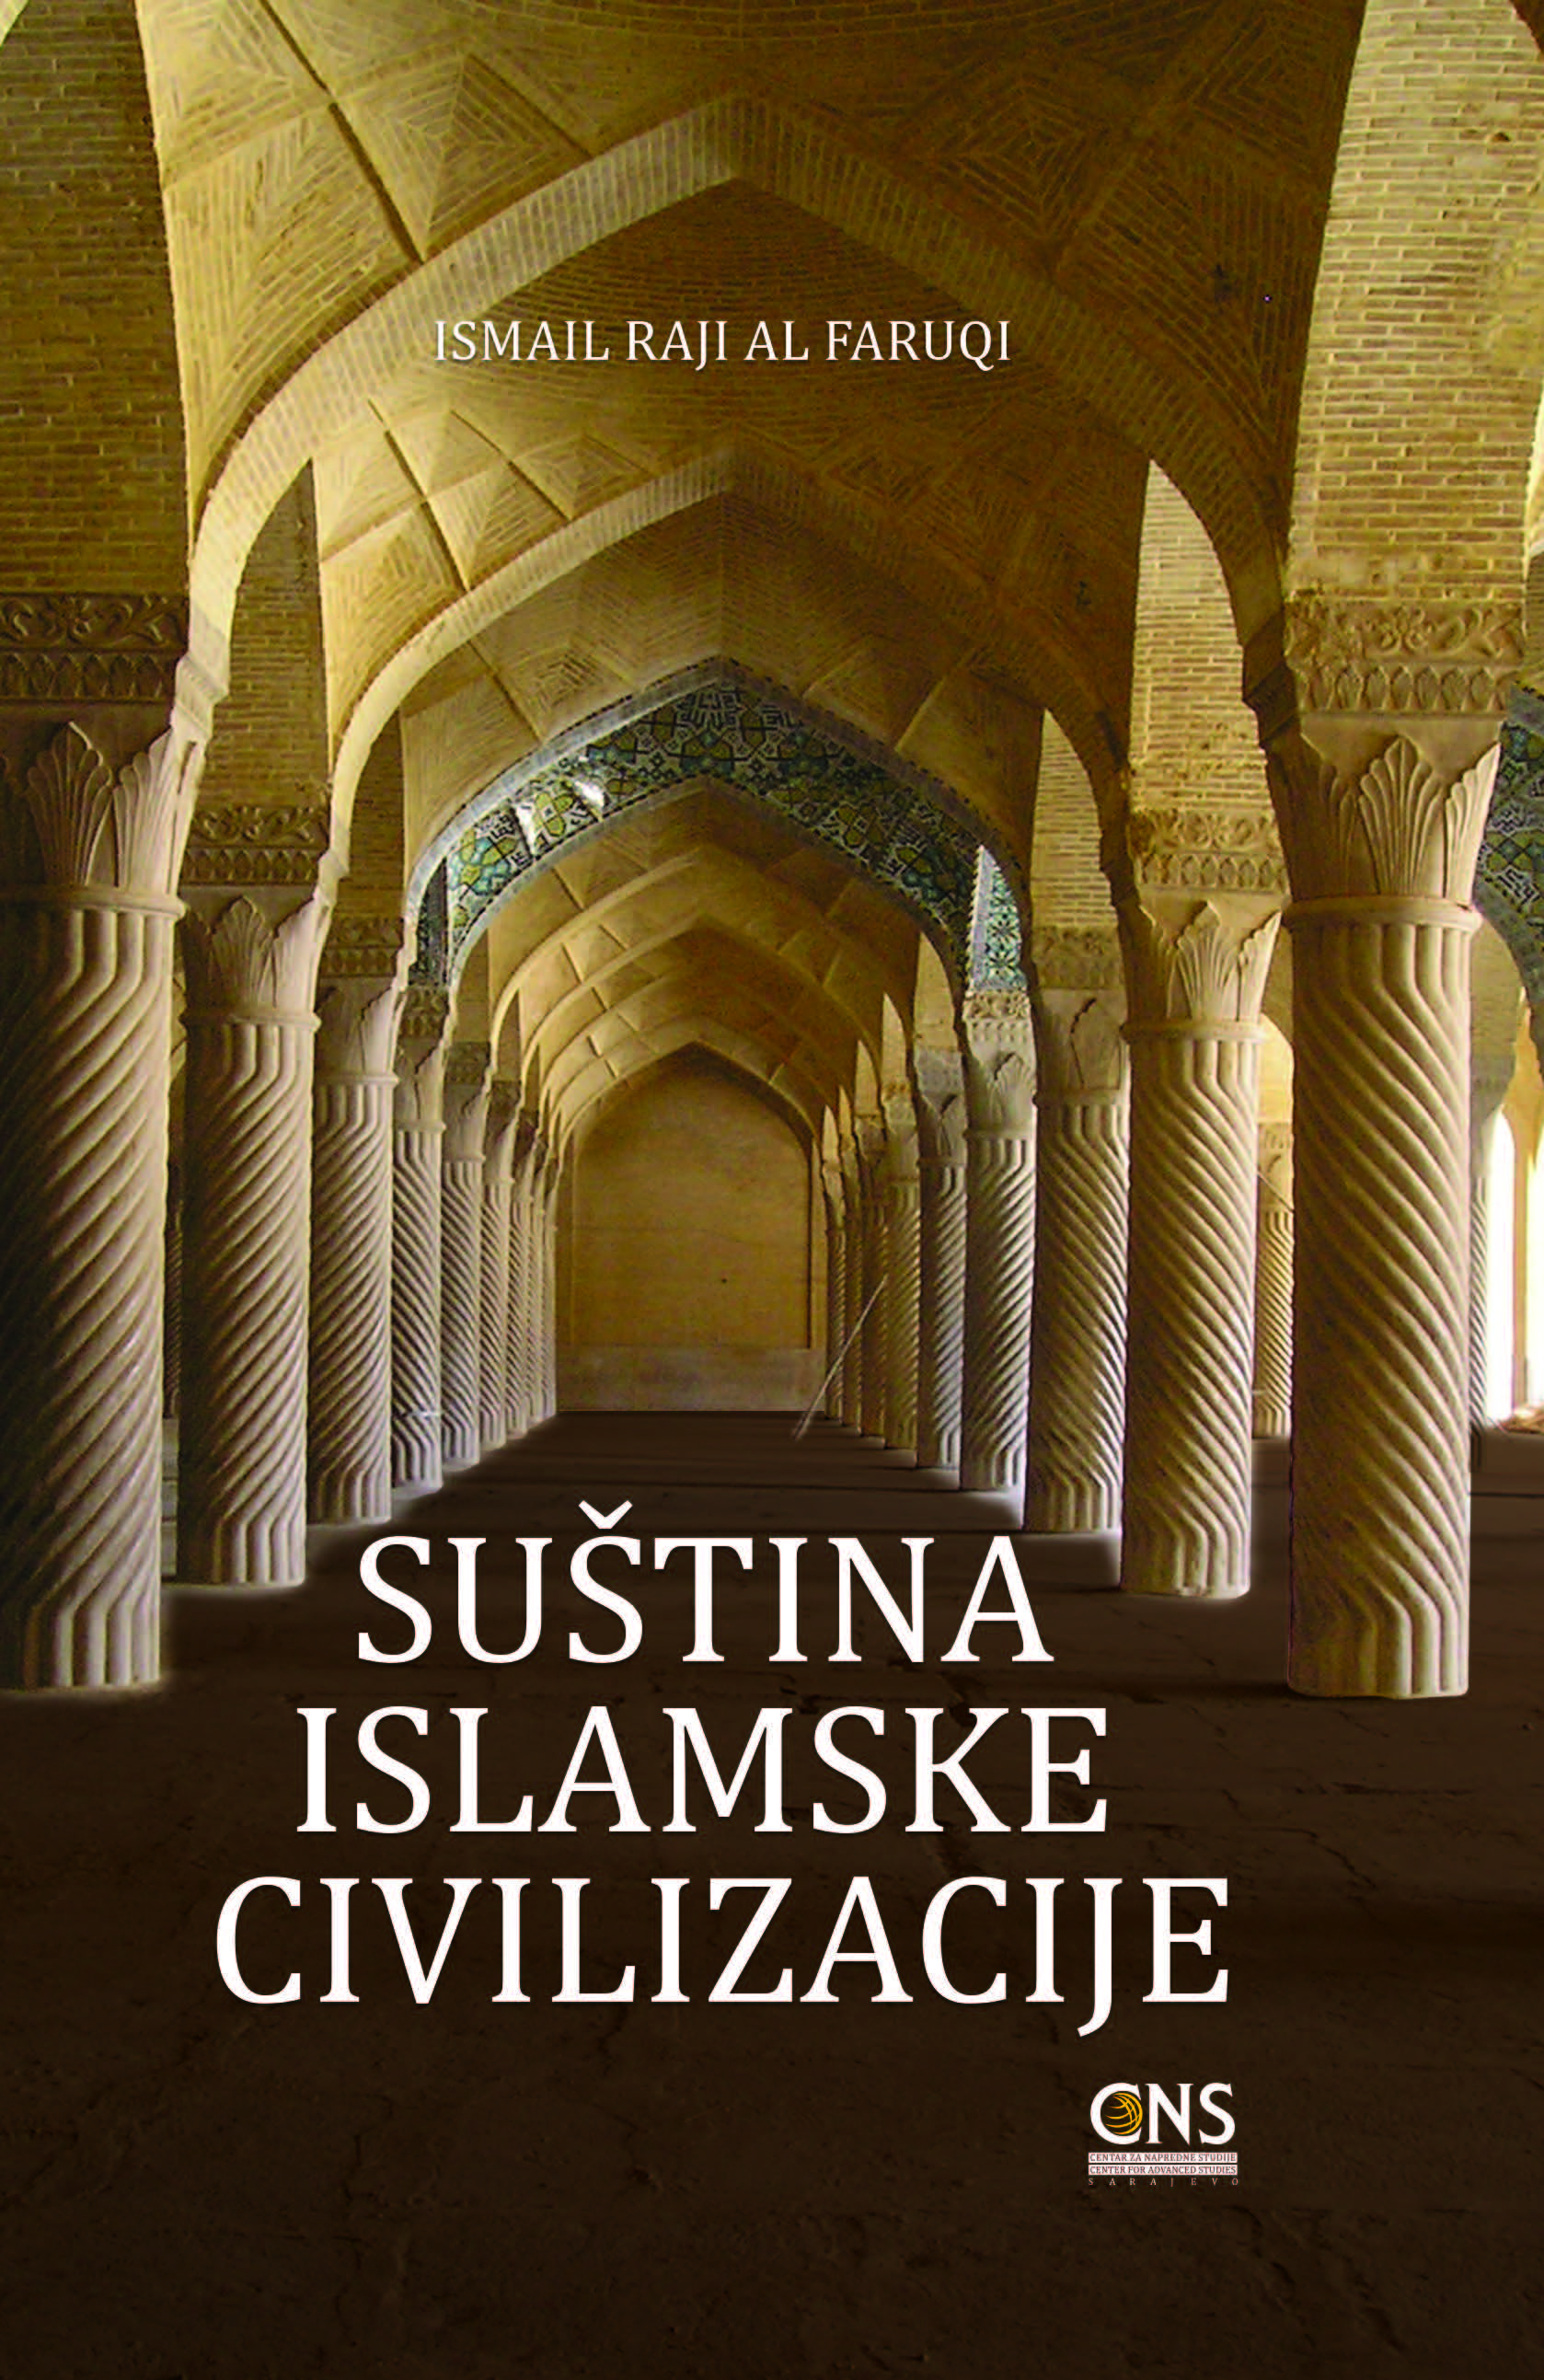 (Bosnian Language) SUŠTINA ISLAMSKE CIVILIZACIJE (The Essence of Islamic Civilization) – Occasional Papers Series 21